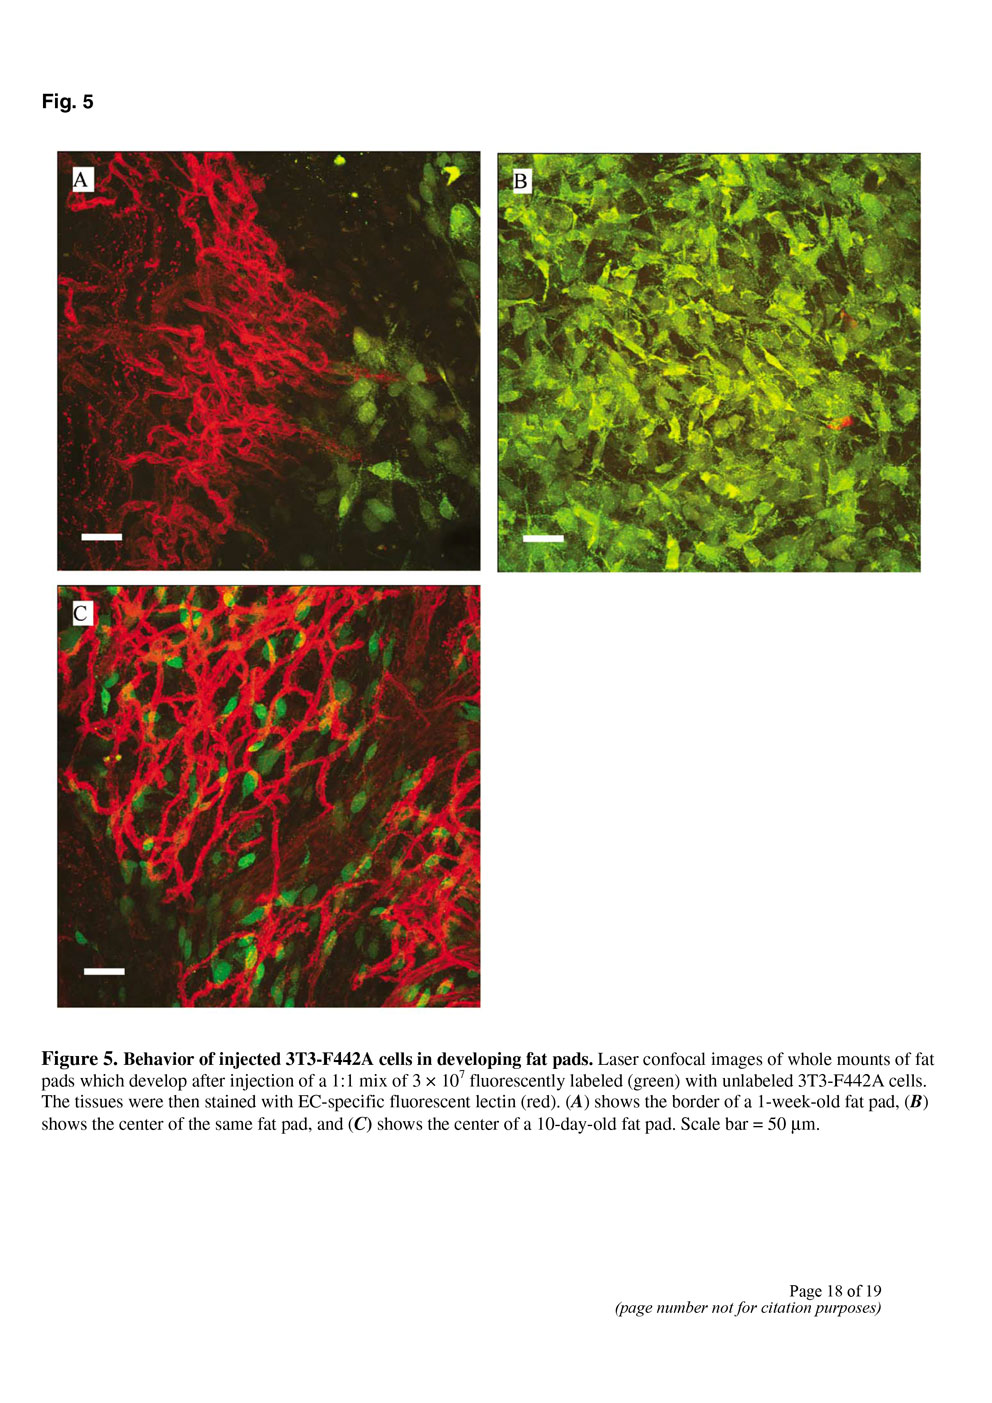 Angiogenesis in an in vivo model of adipose tissue development P18